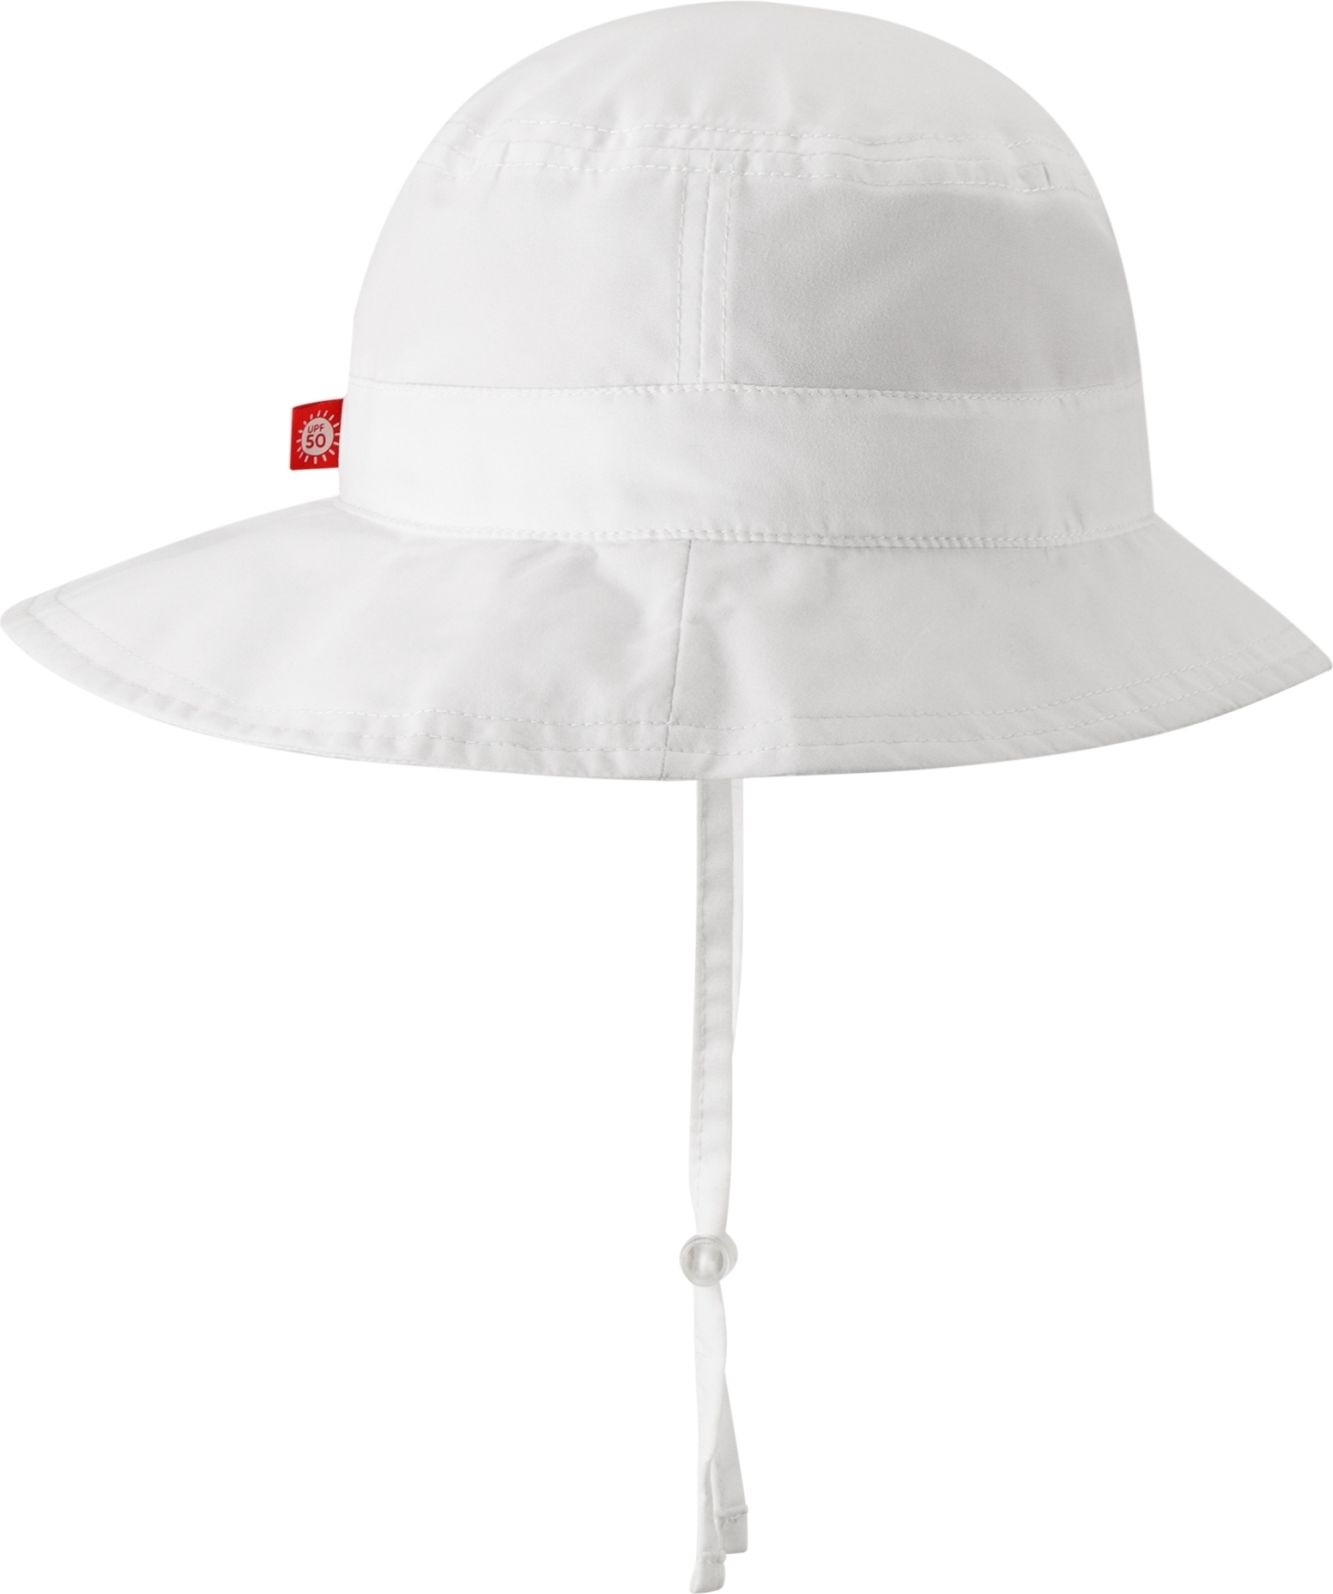 REIMA UV klobouček proti slunci Tropical White 52 - obrázek 1